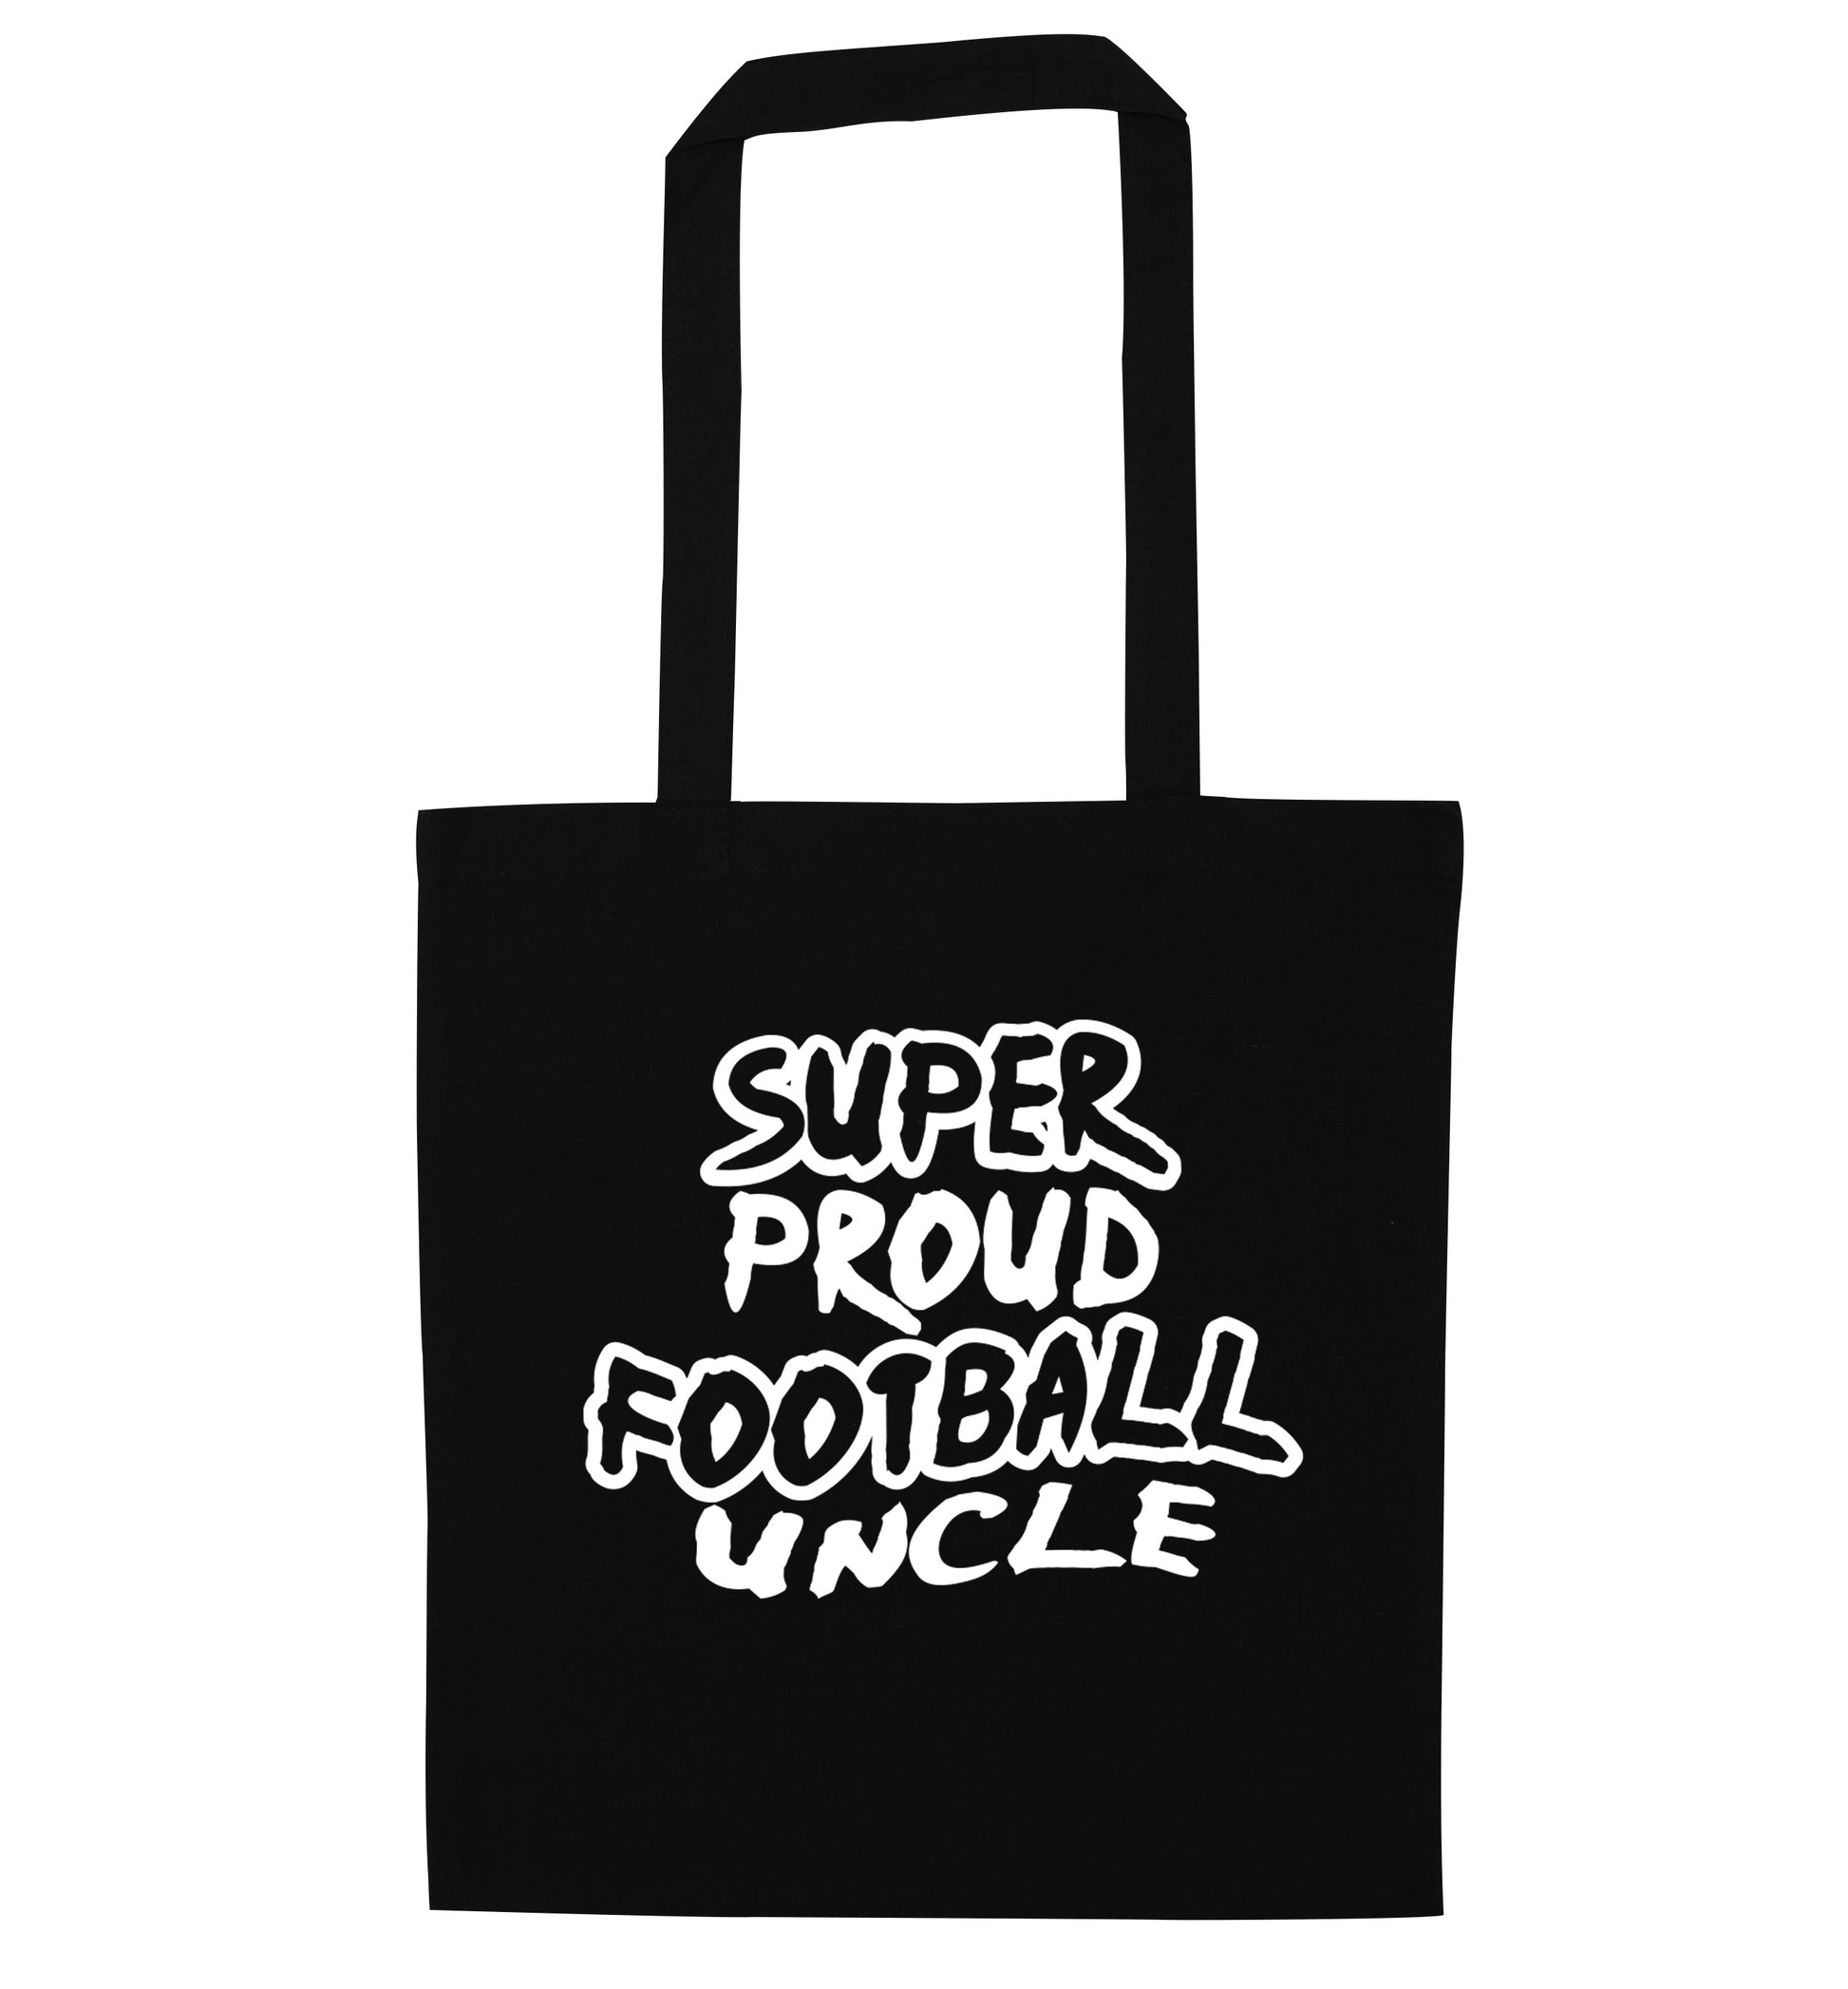 Super proud football uncle black tote bag